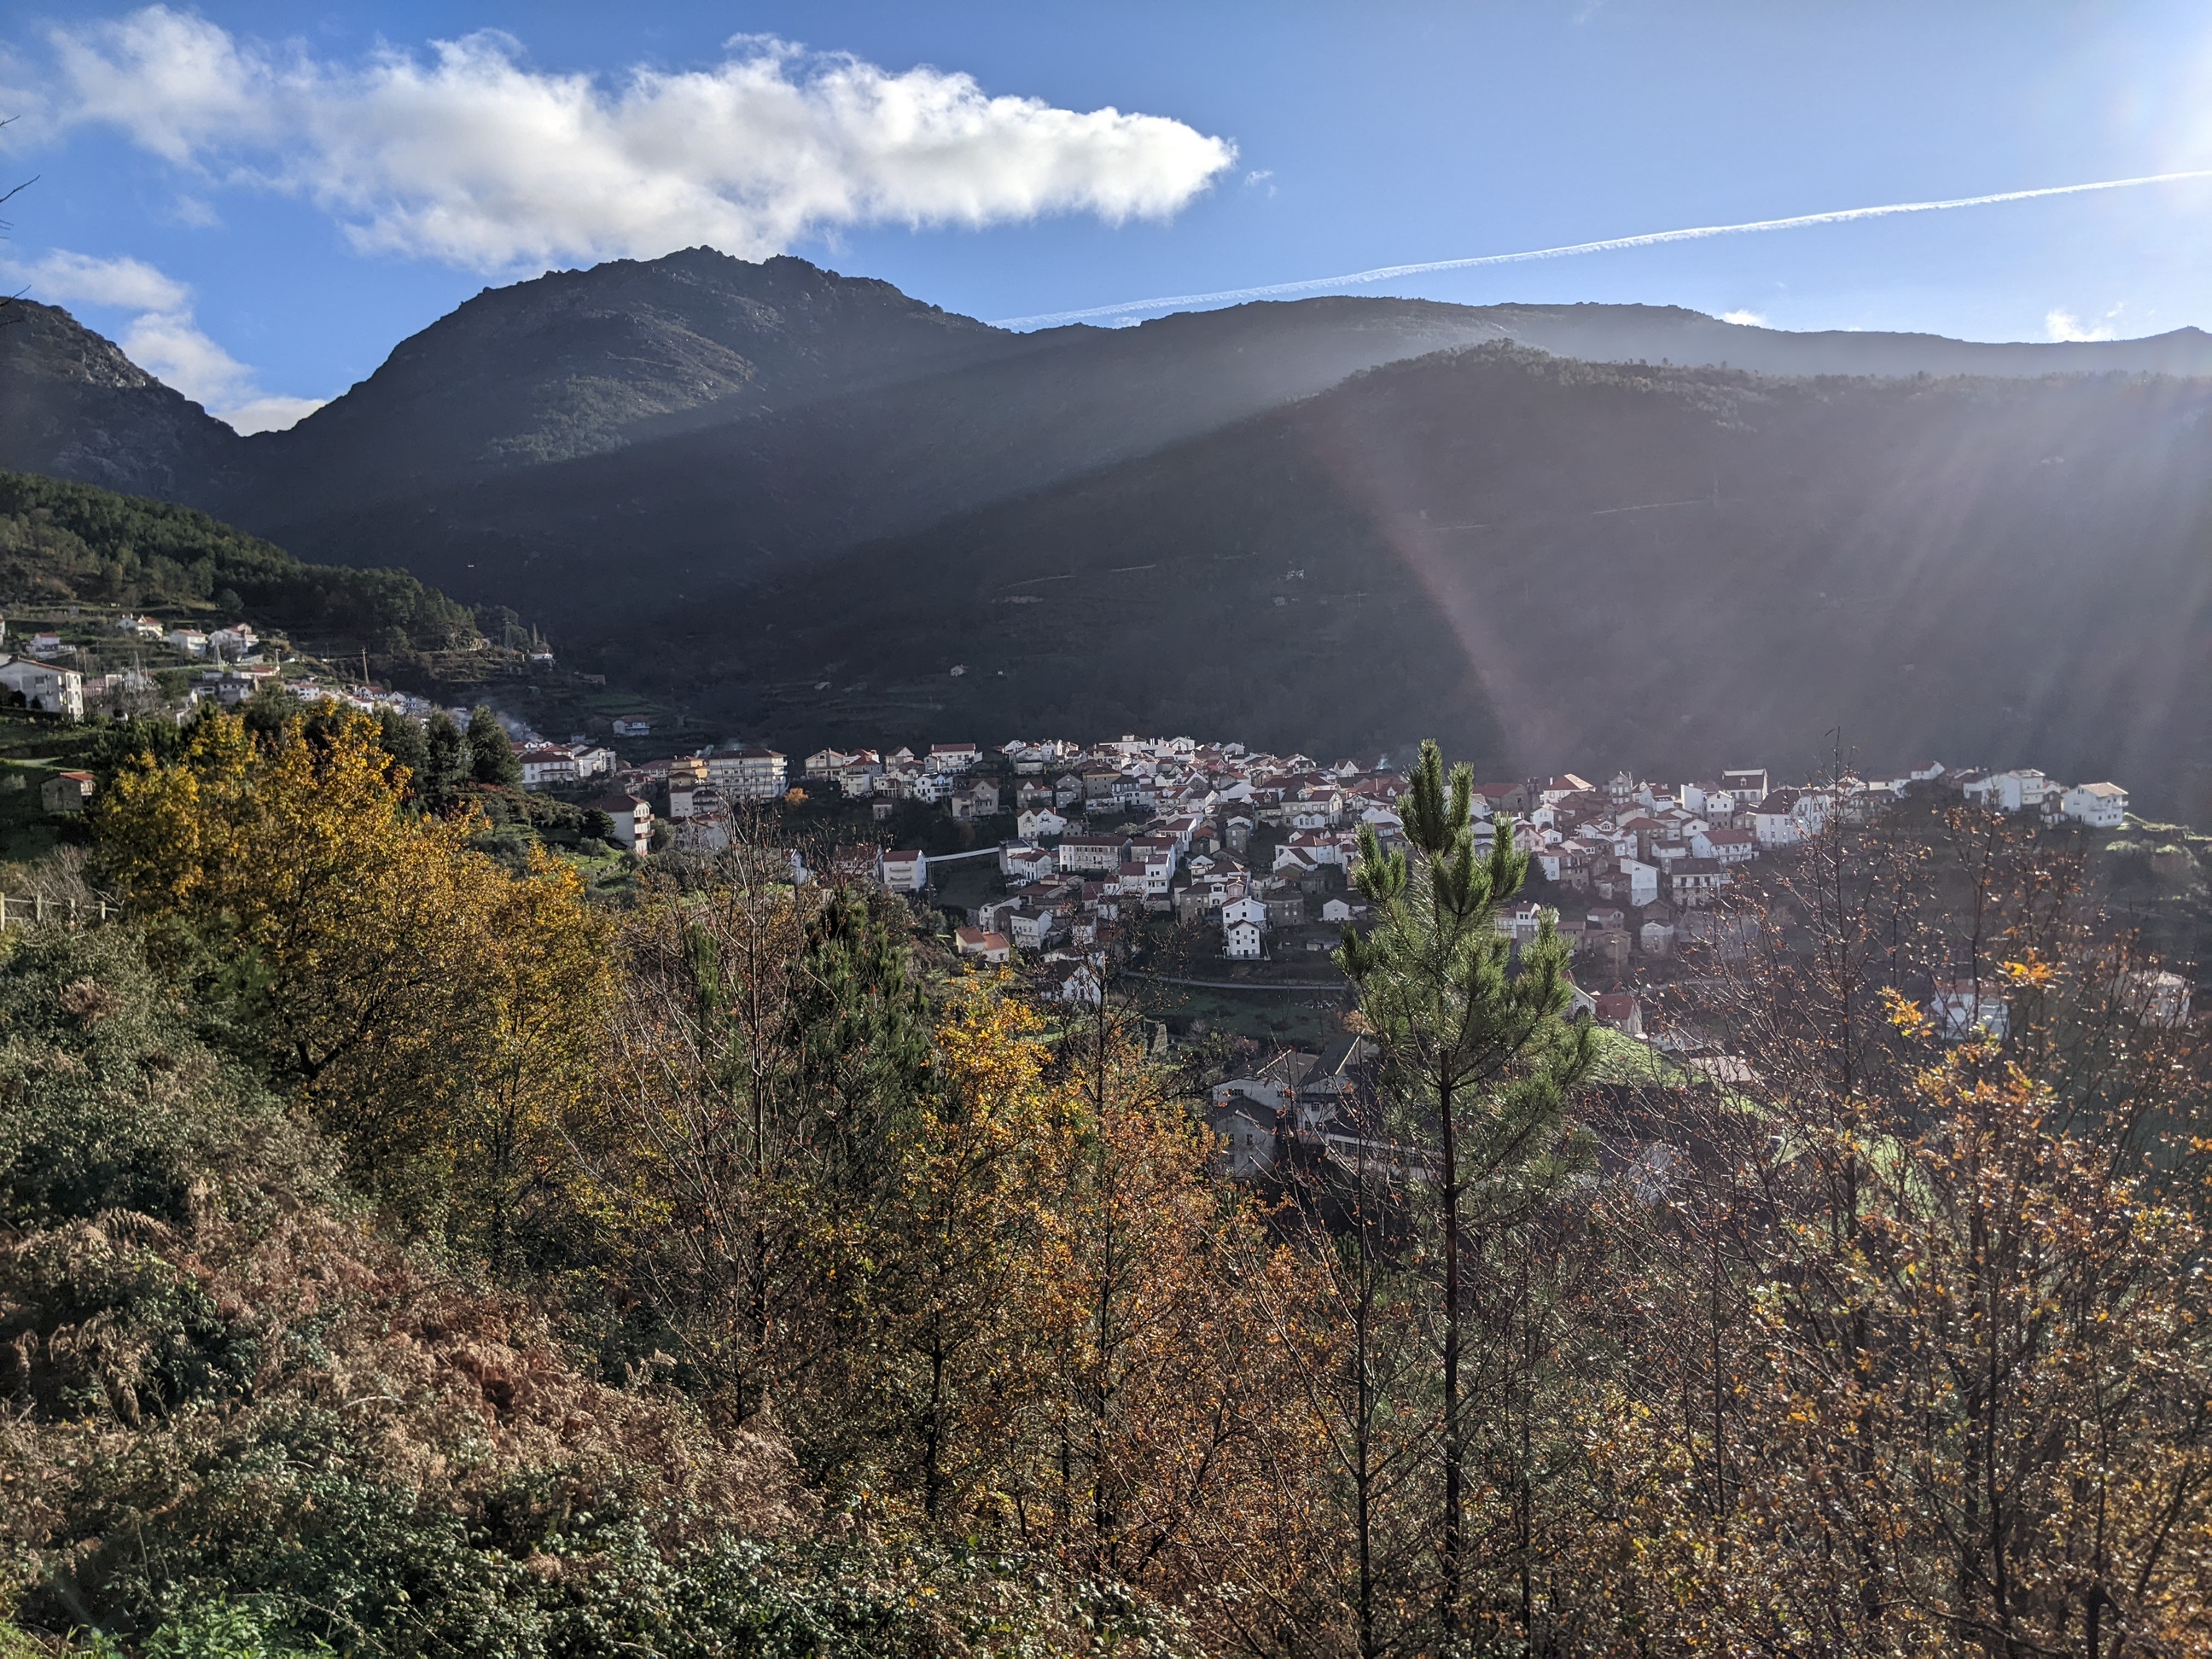 a mountain town shining in the sunlight